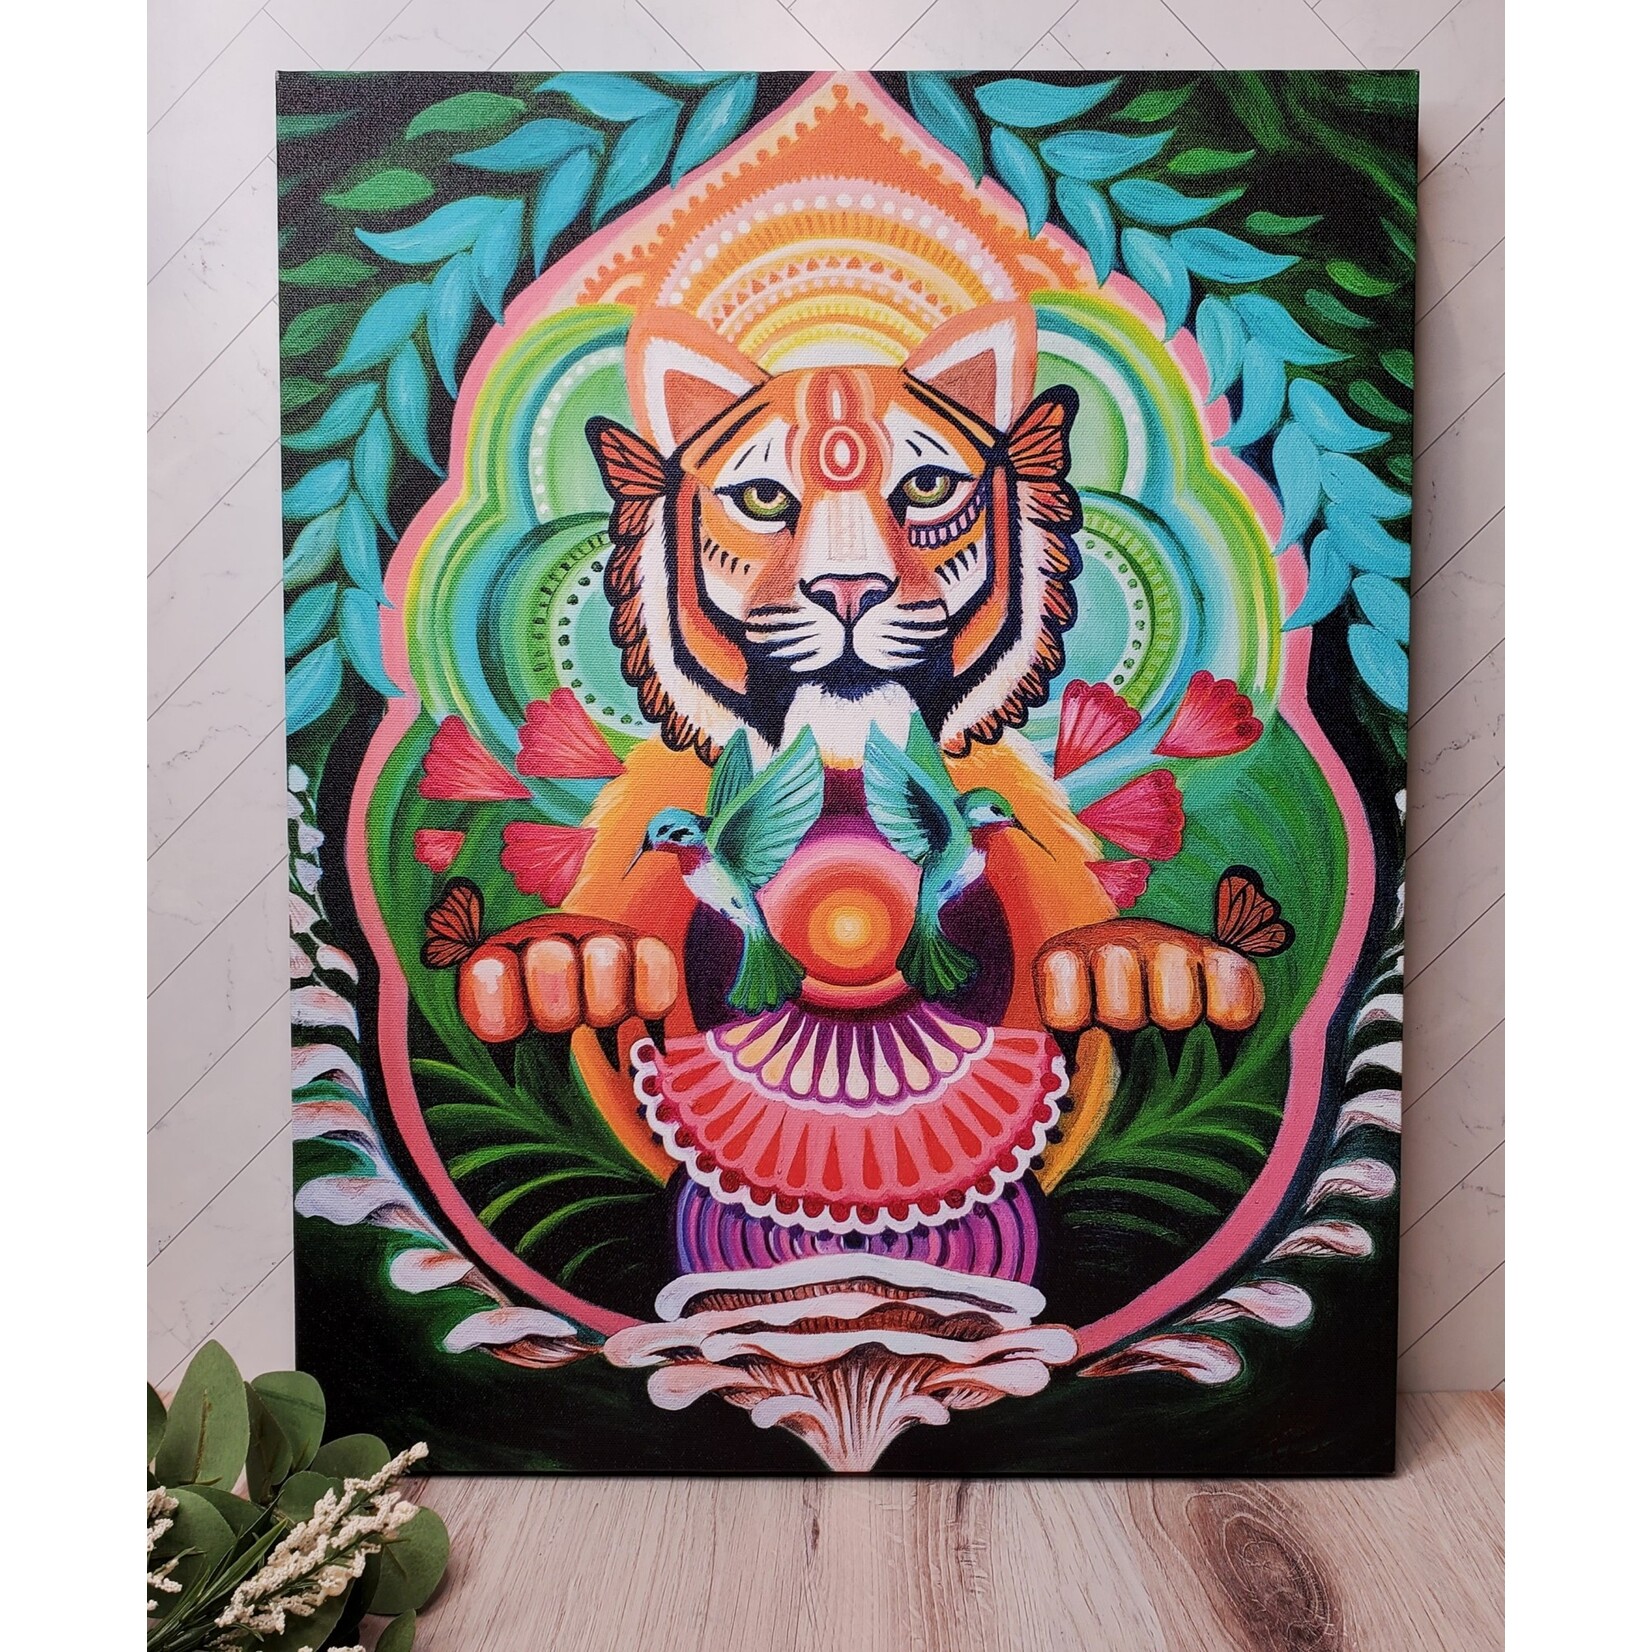 Asja Dawn "Tiger Medicine" - Giclee Canvas Print